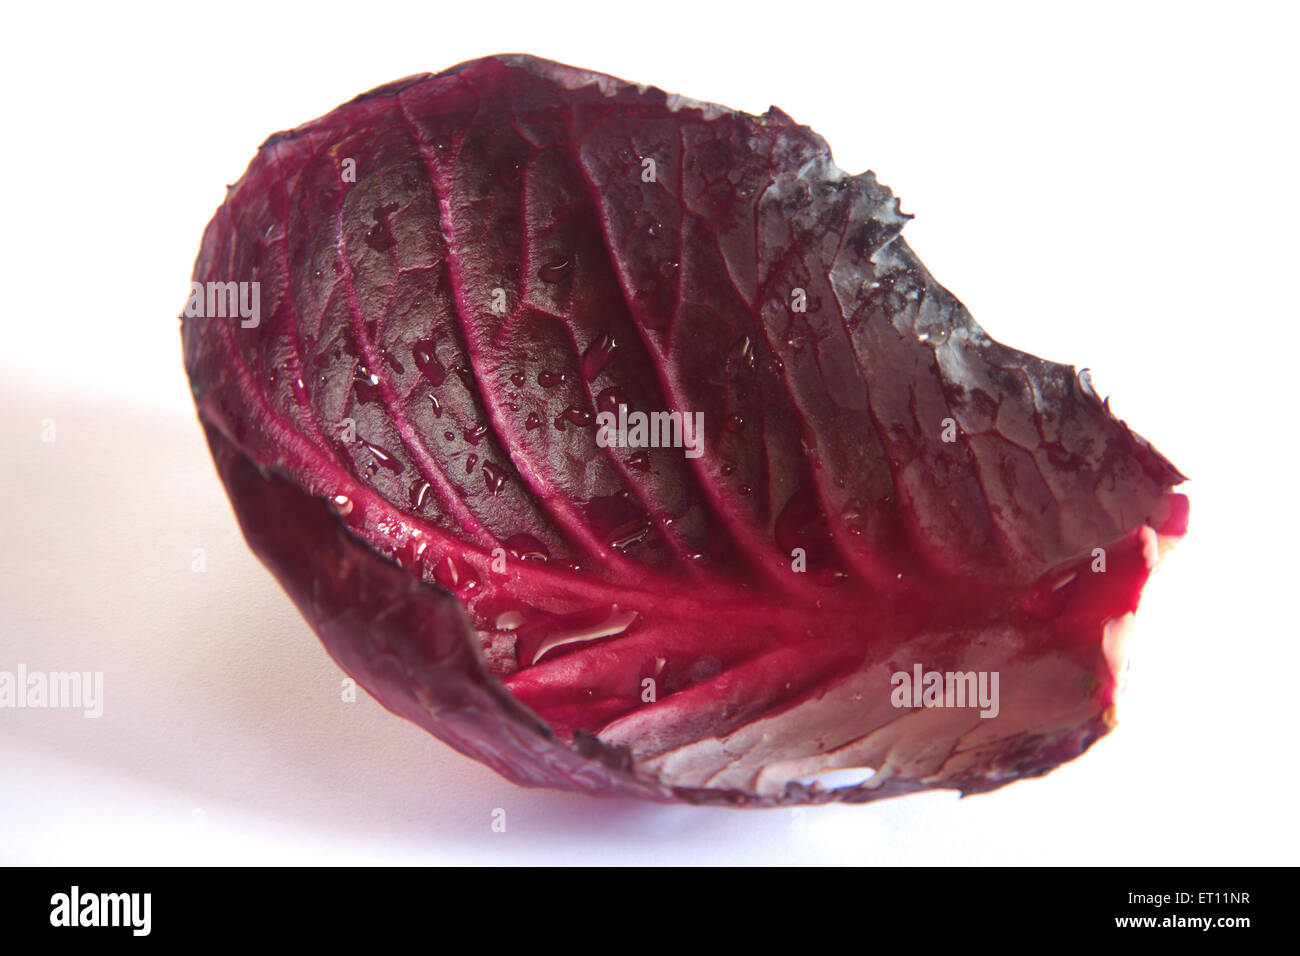 Vegetable ; pattagobi cabbage purple reddish blue violet on white background Stock Photo